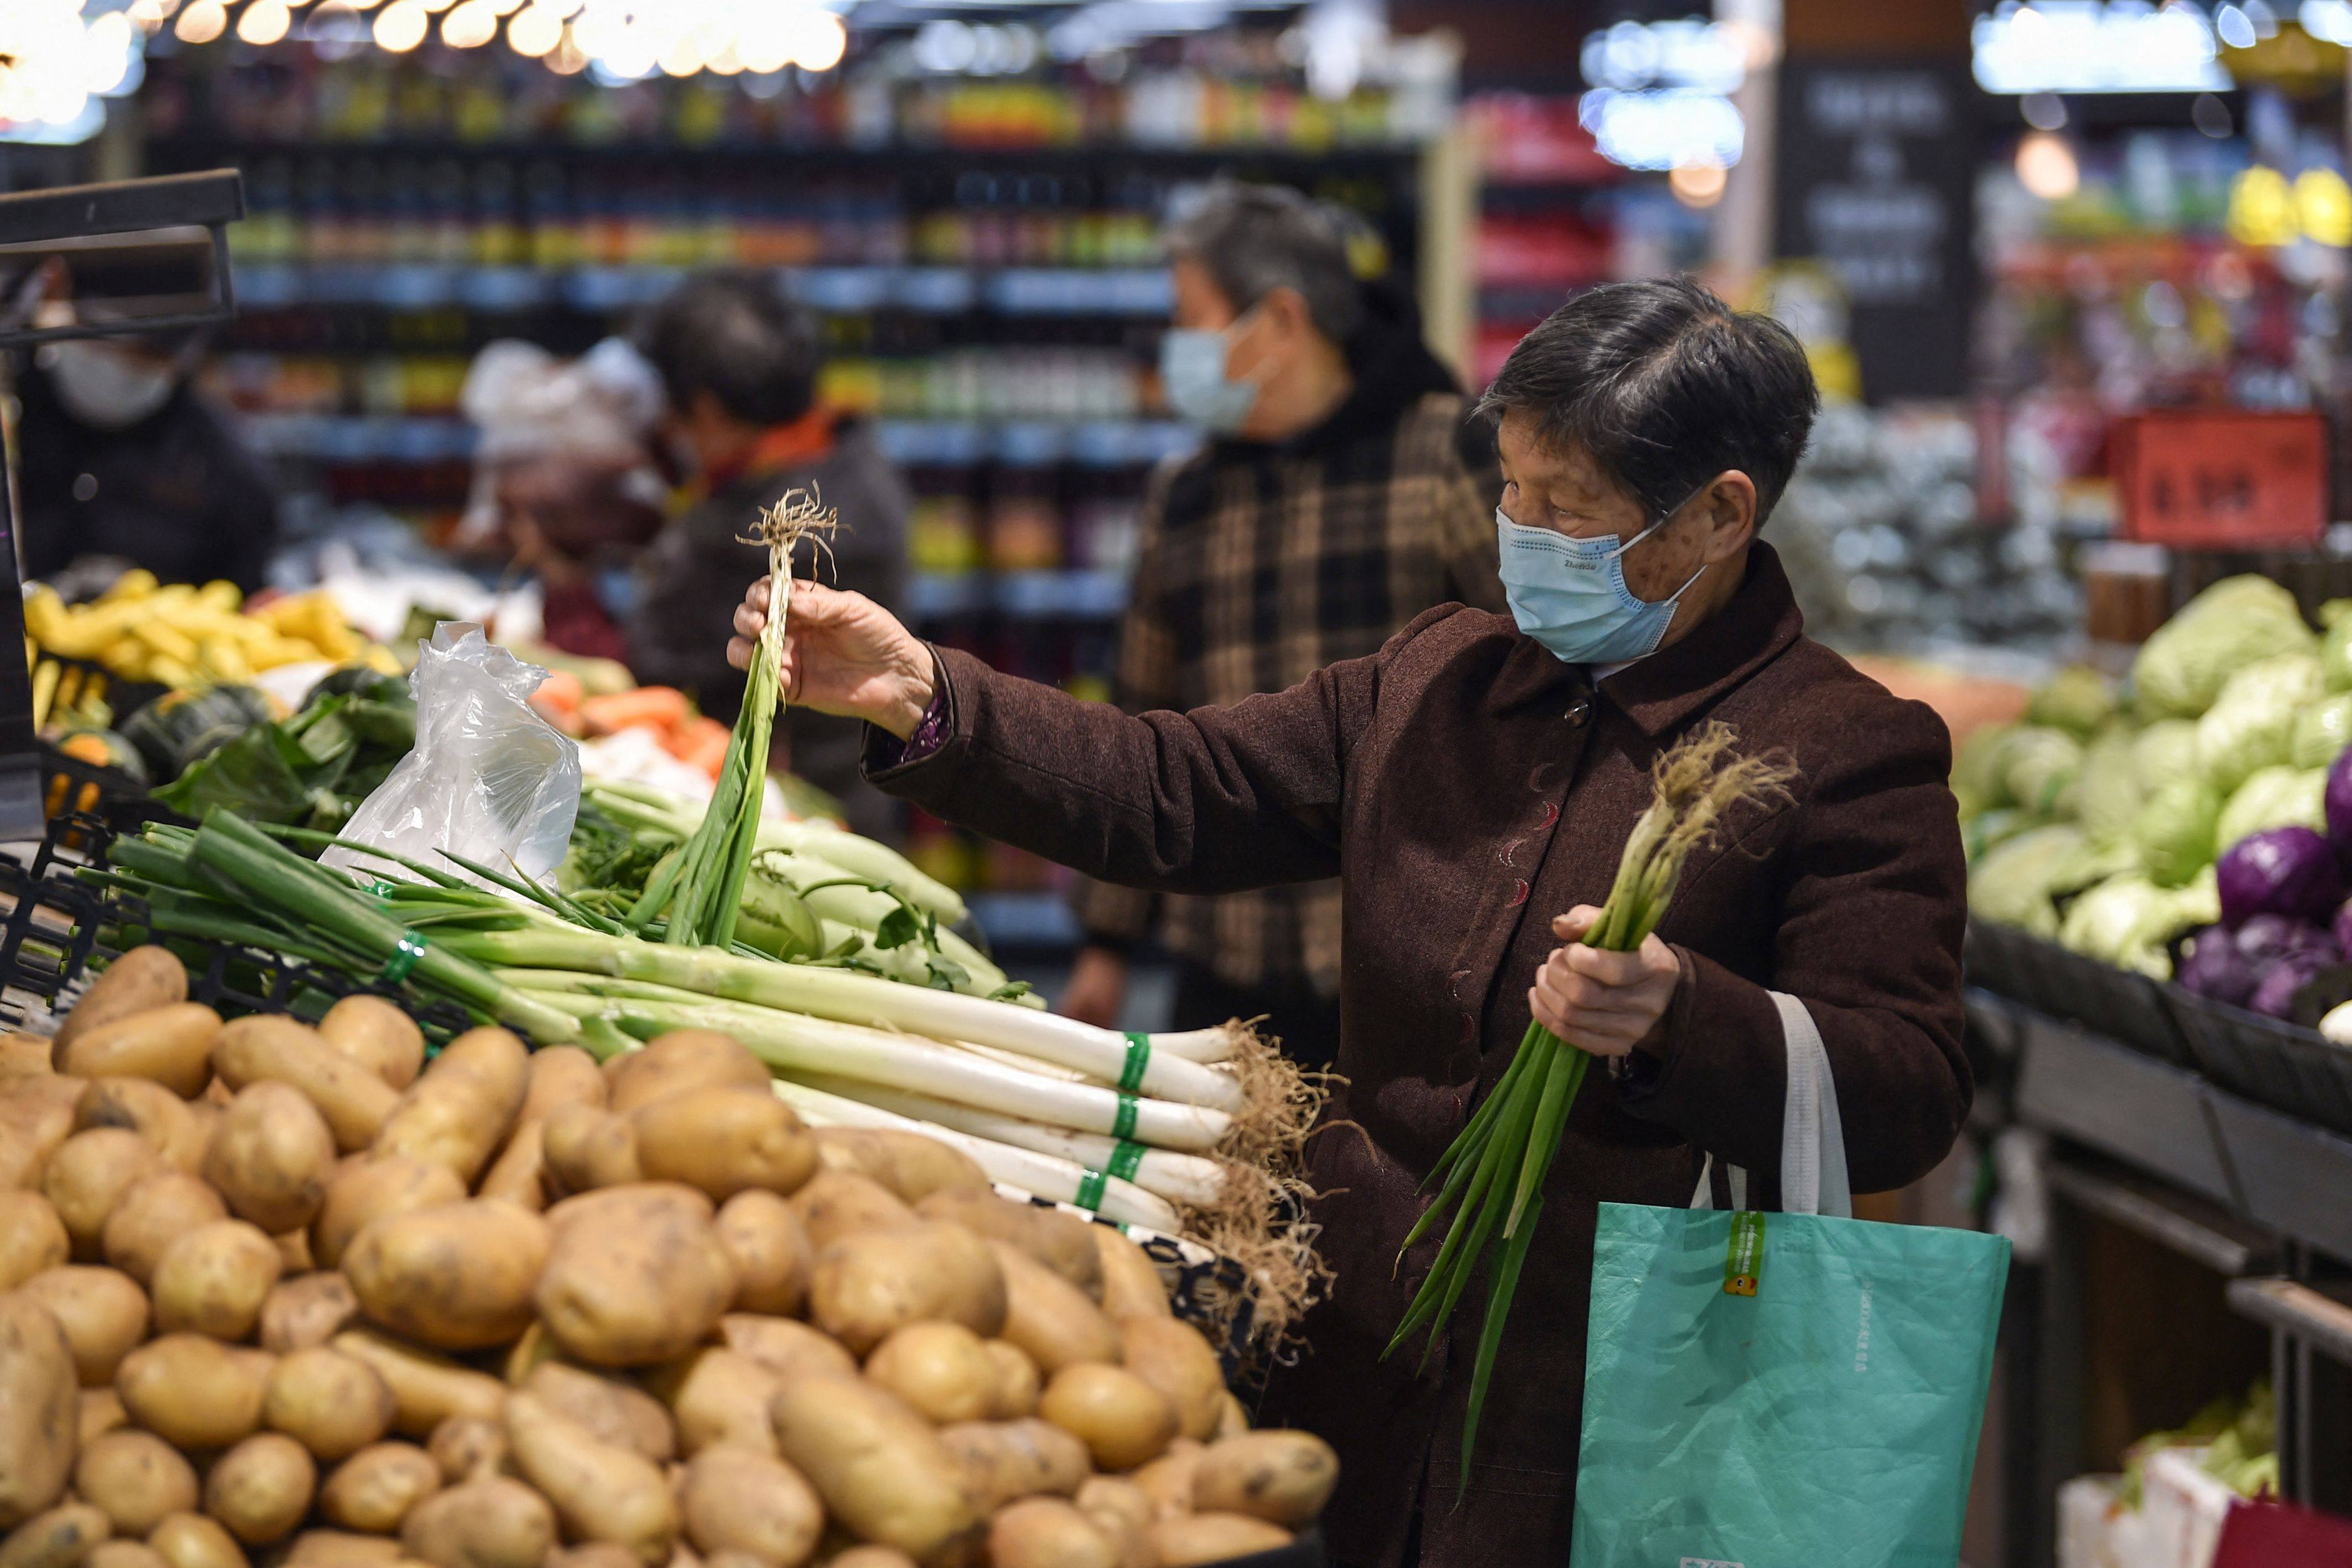 A customer shops at a supermarket in Nanjing. Photo: AFP